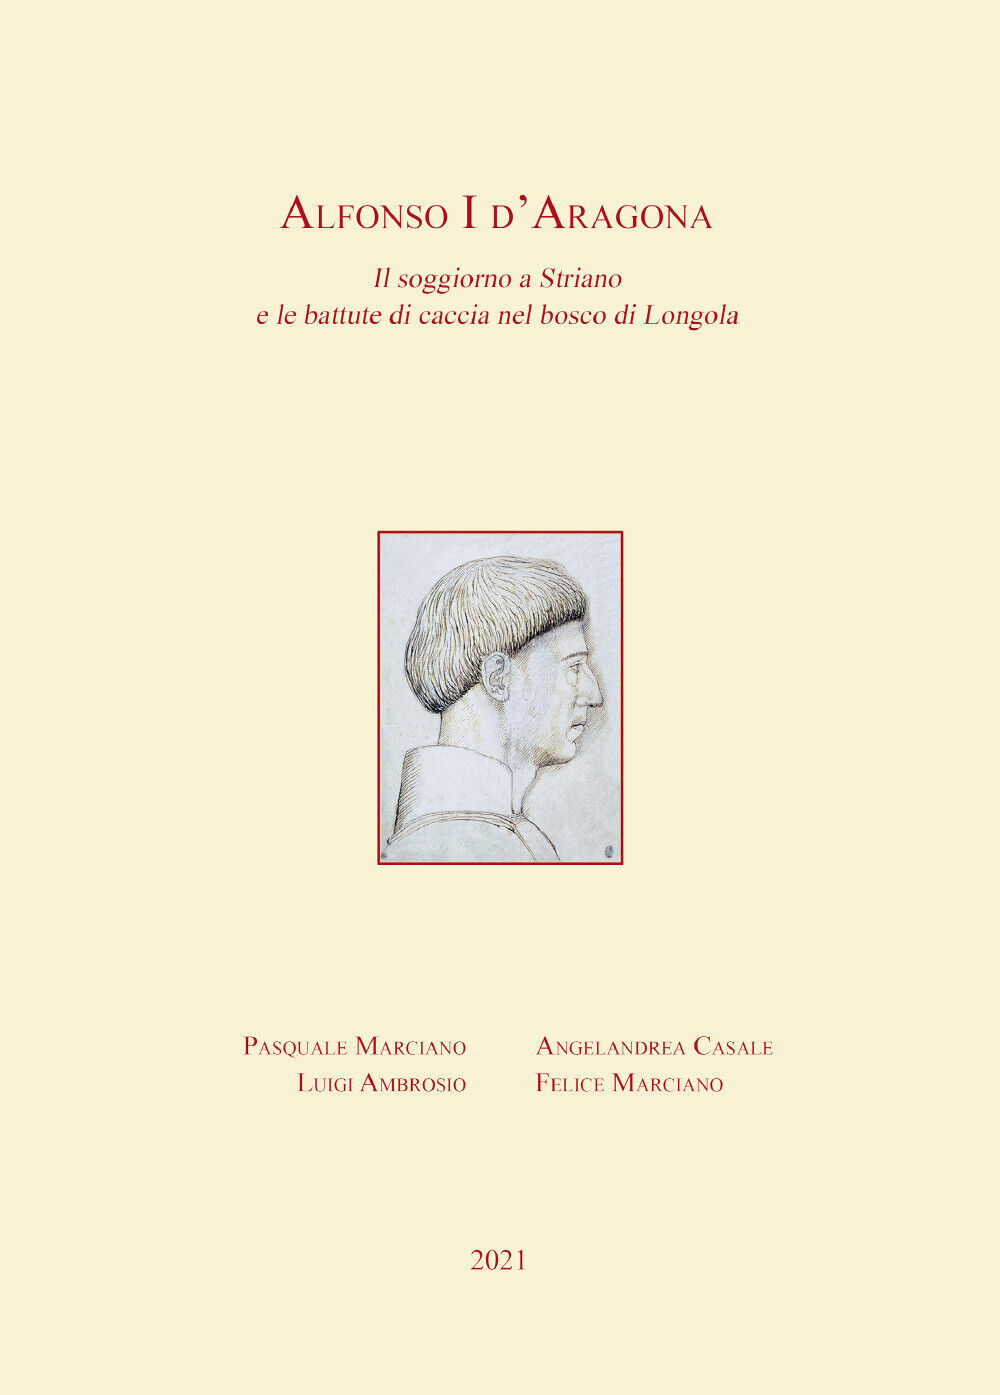 Alfonso I d'Aragonadi Pasquale Marciano, Angelandrea Casale, Felice Marciano, Lu